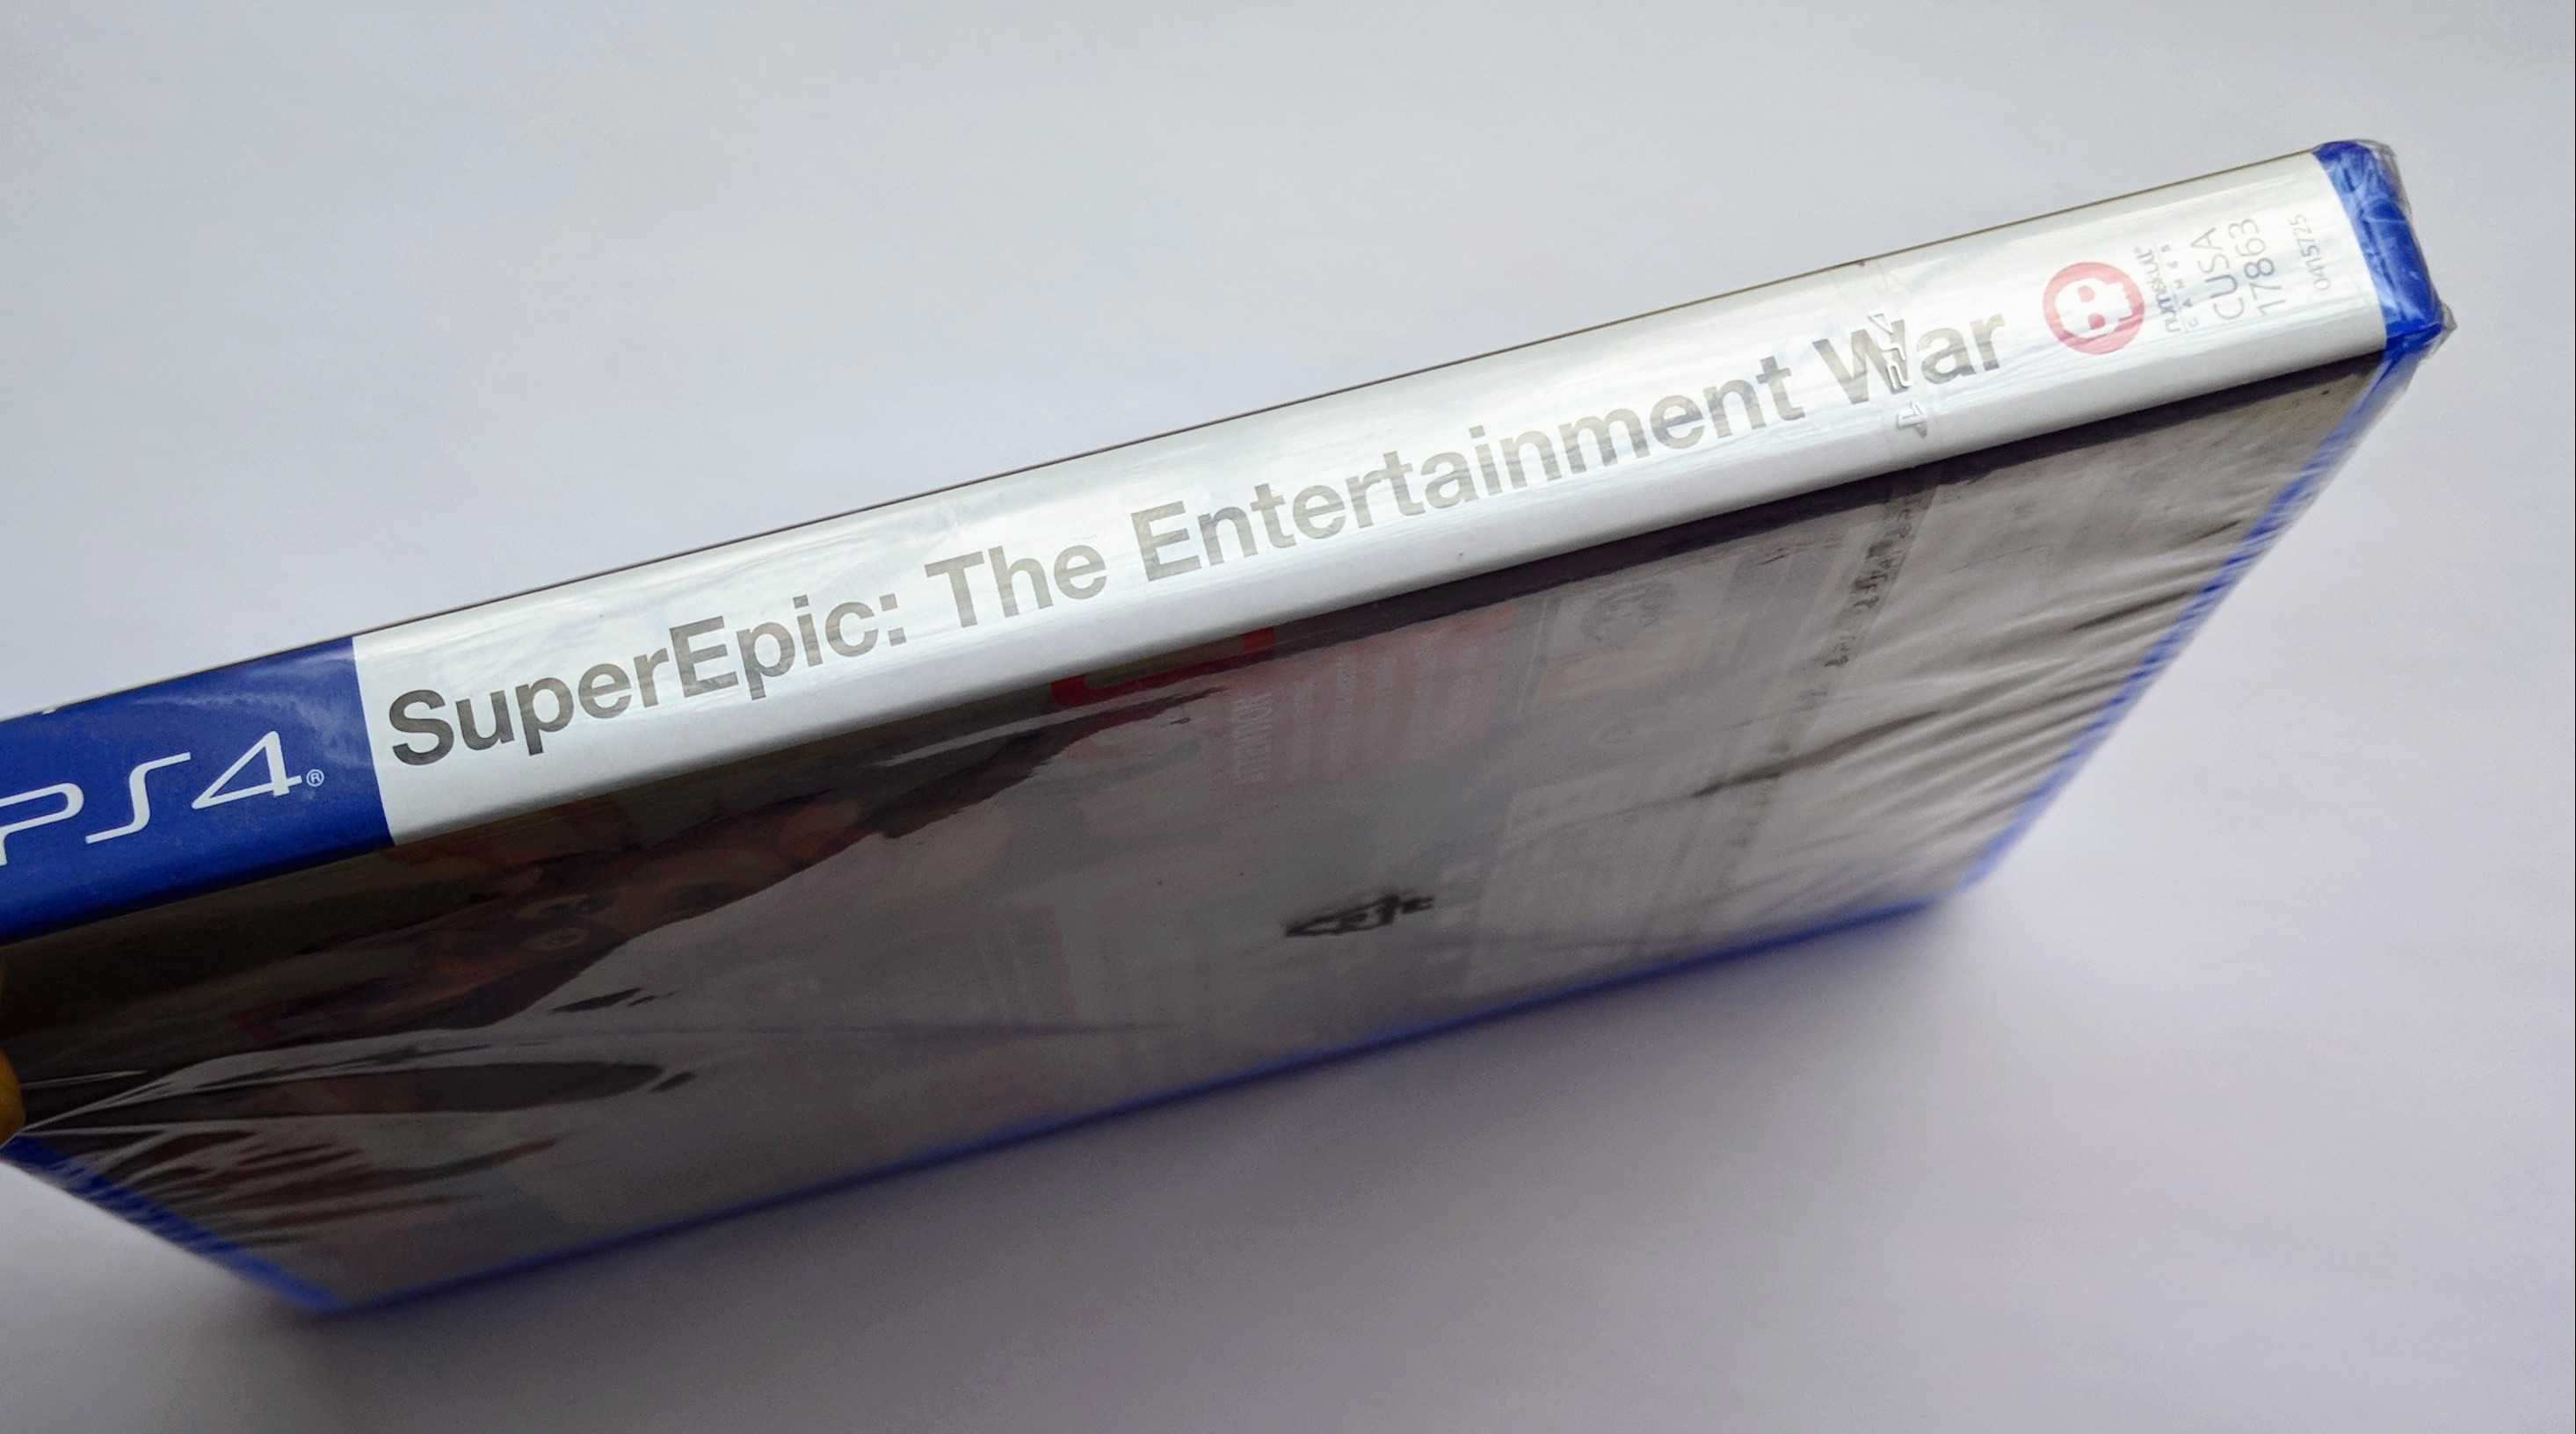 SUPEREPIC The Entertainment War PS4 playstation НОВИЙ диск + бейджи